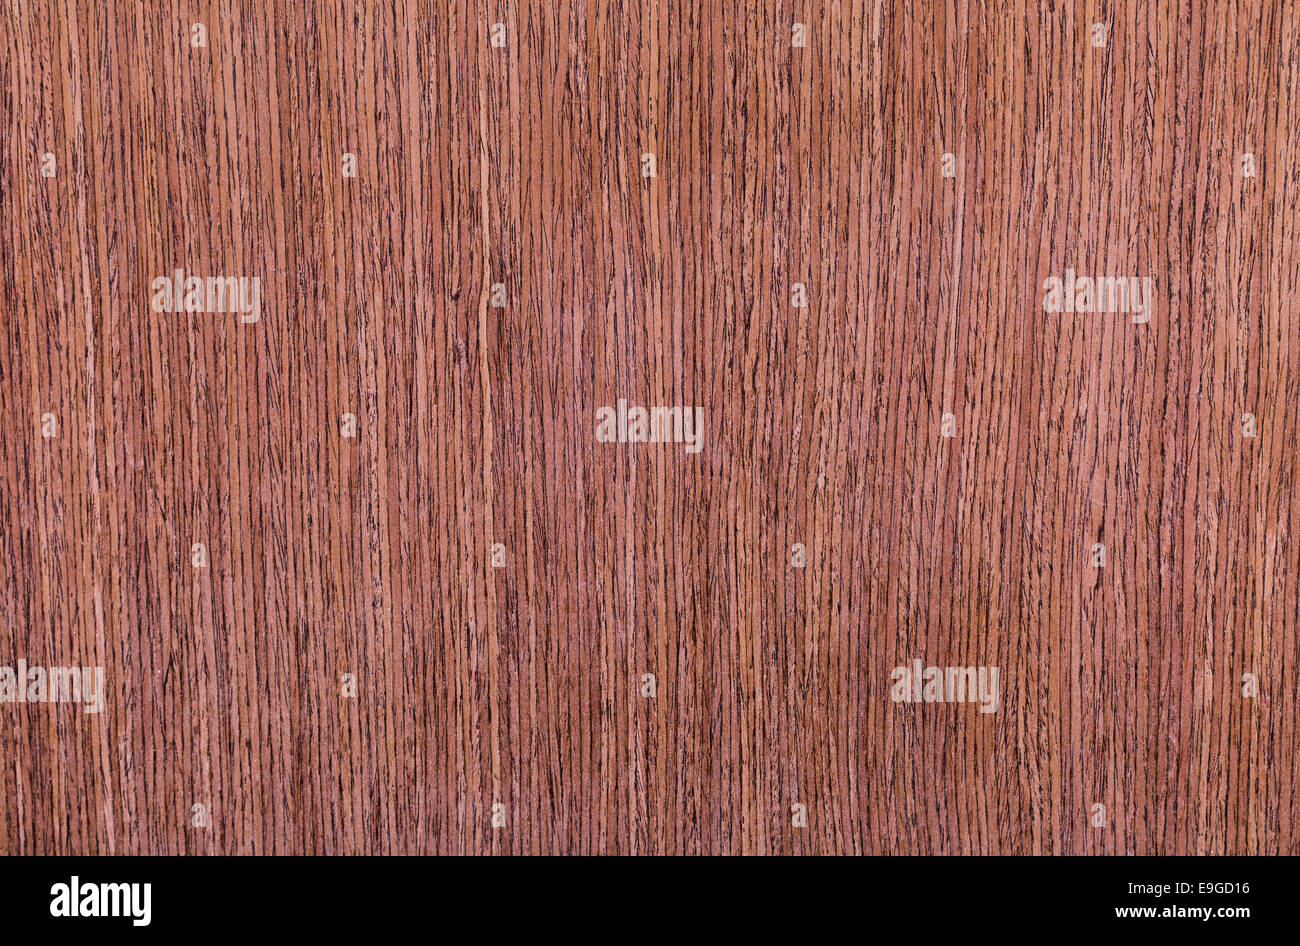 Textura de madera natural como fondo Foto de stock